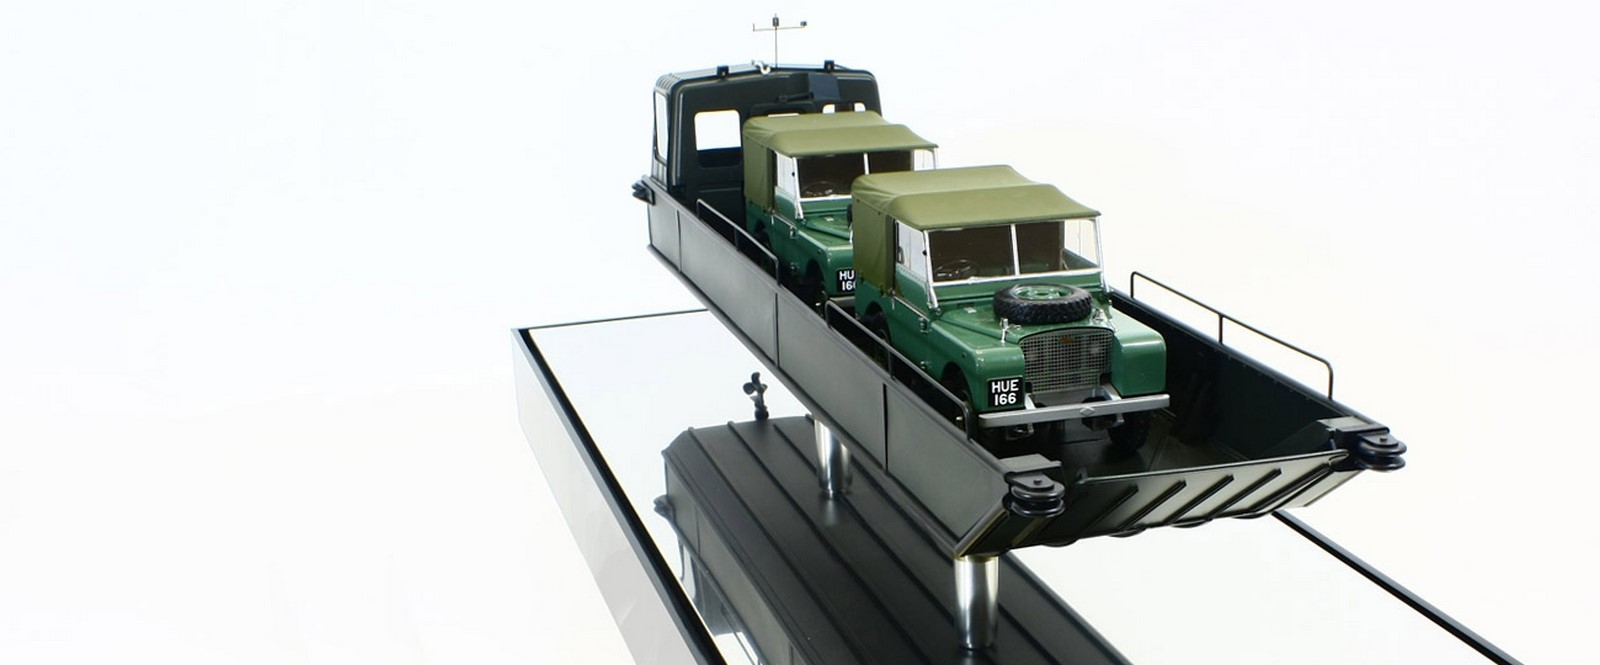 Rotork Sea Truck_httpswww.amalgam-models.co.uk